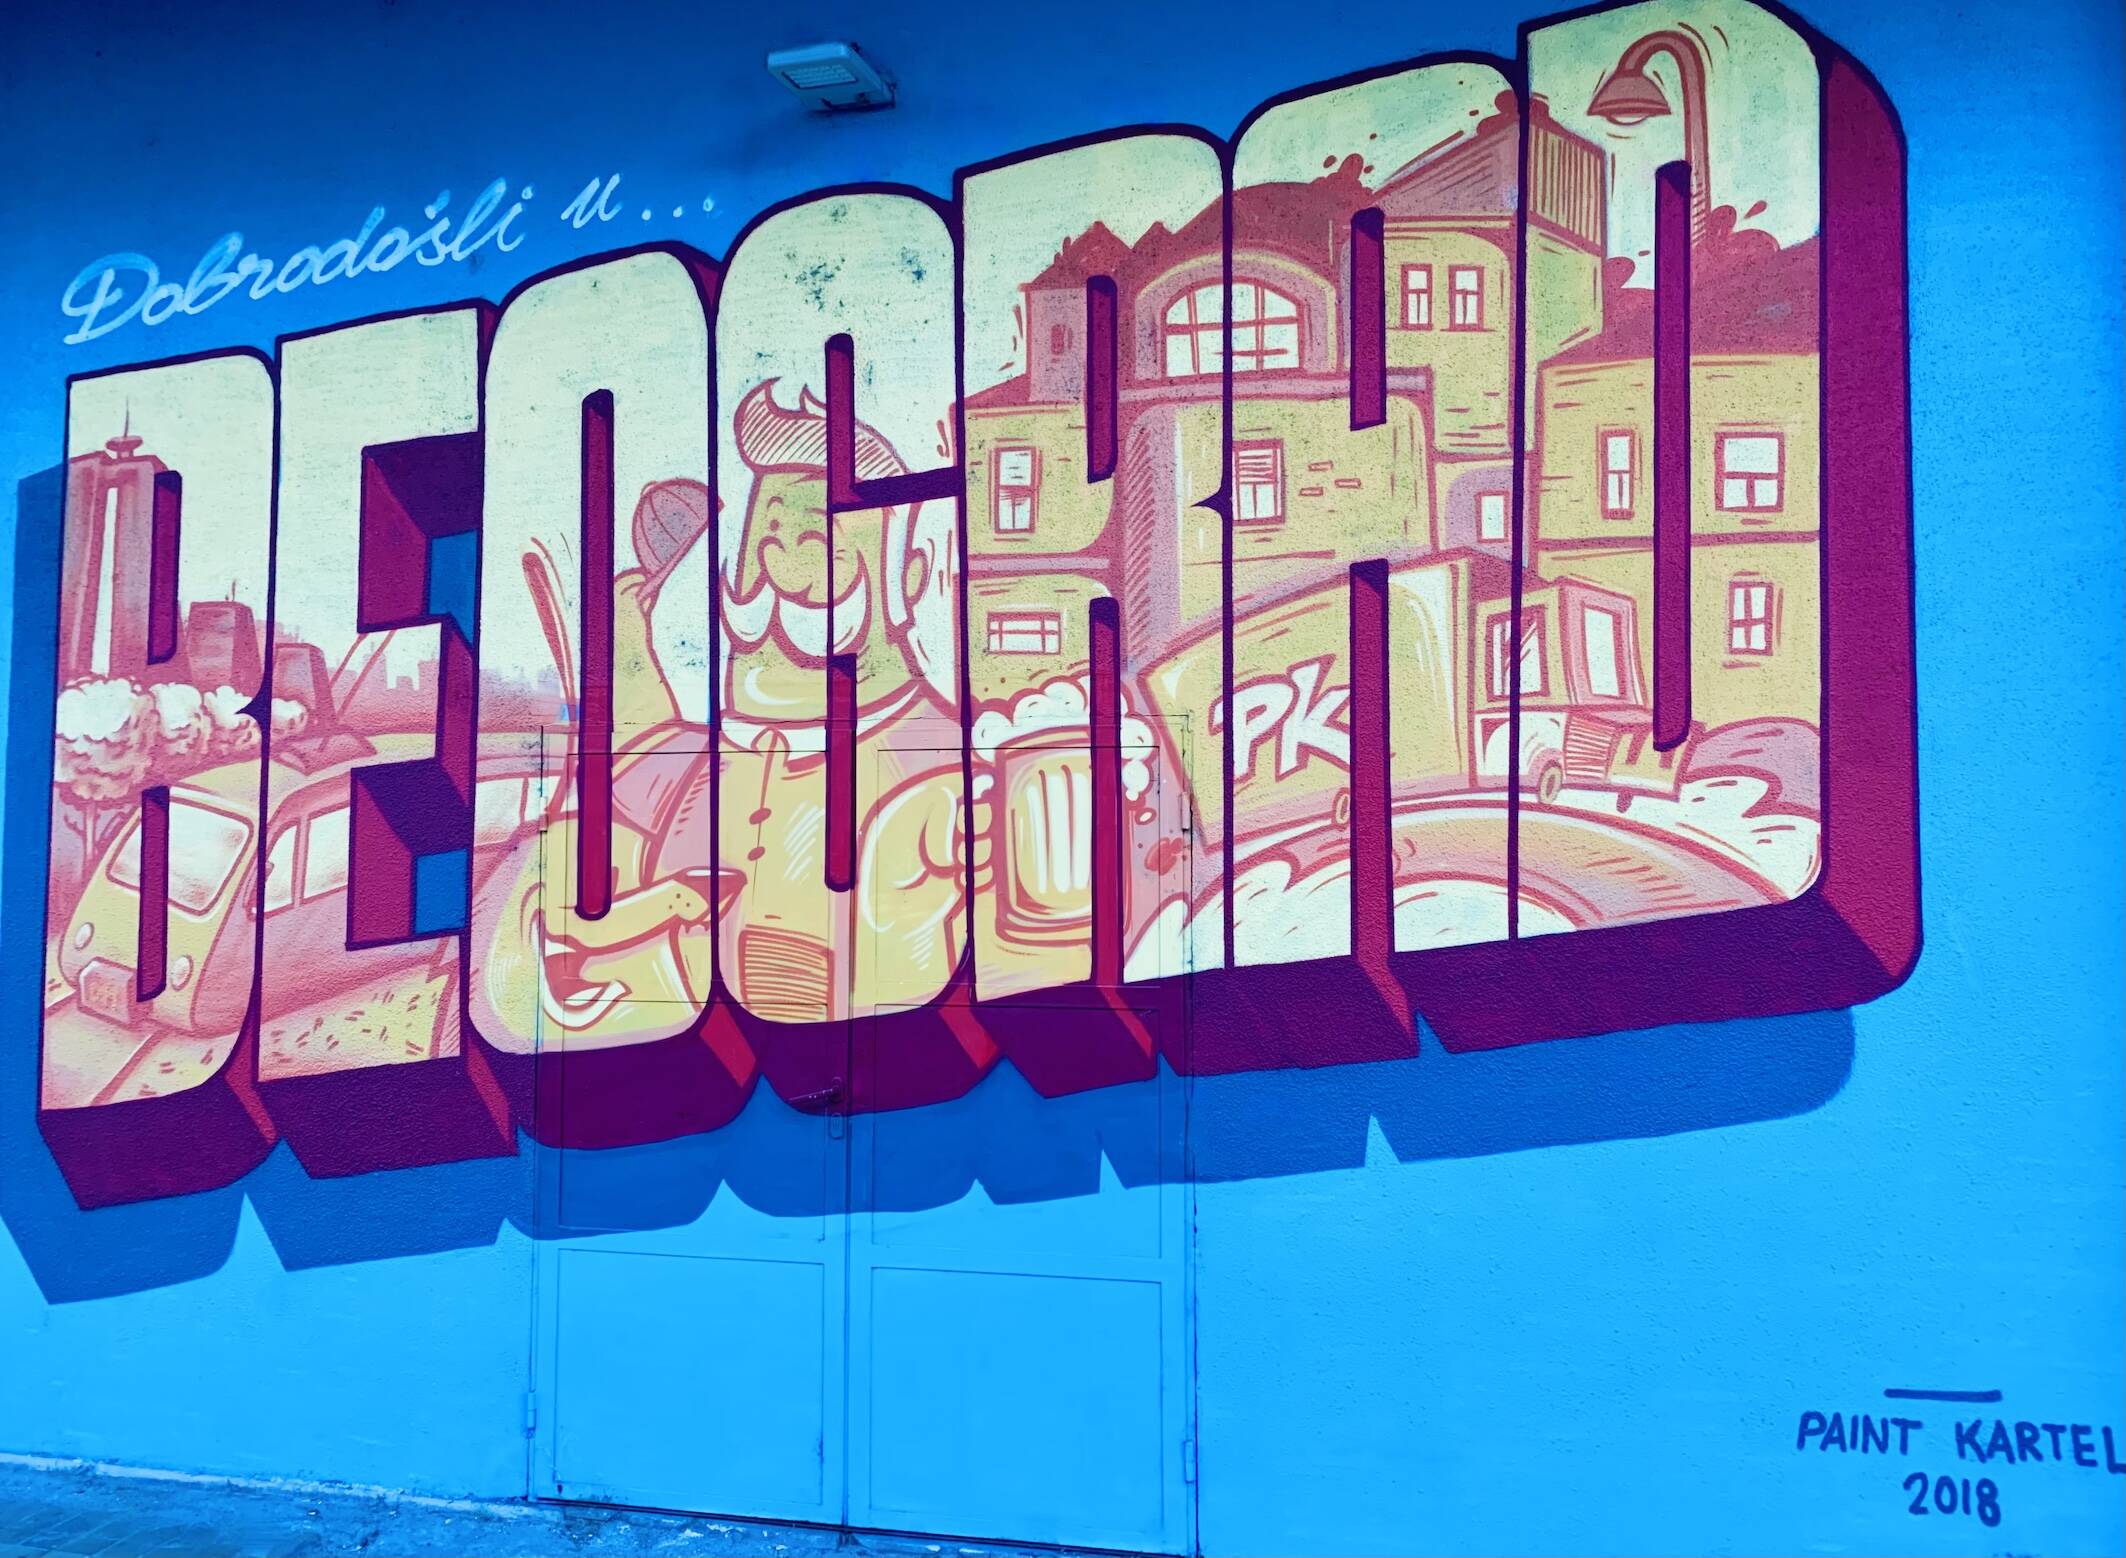 Welcome to Belgrade mural 2018 by Paint Kartel